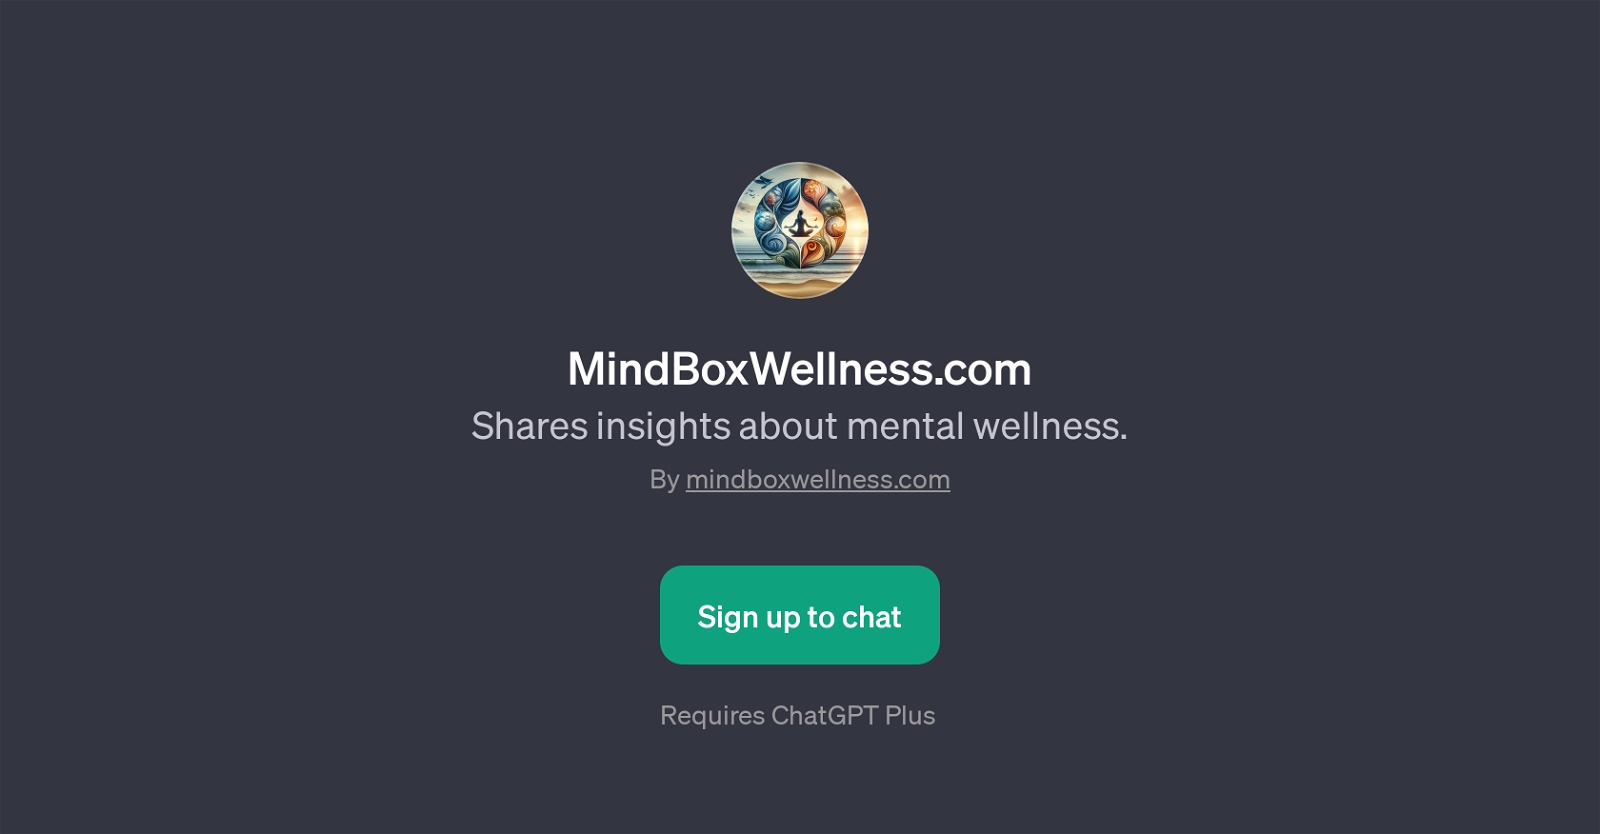 MindBoxWellness.com website